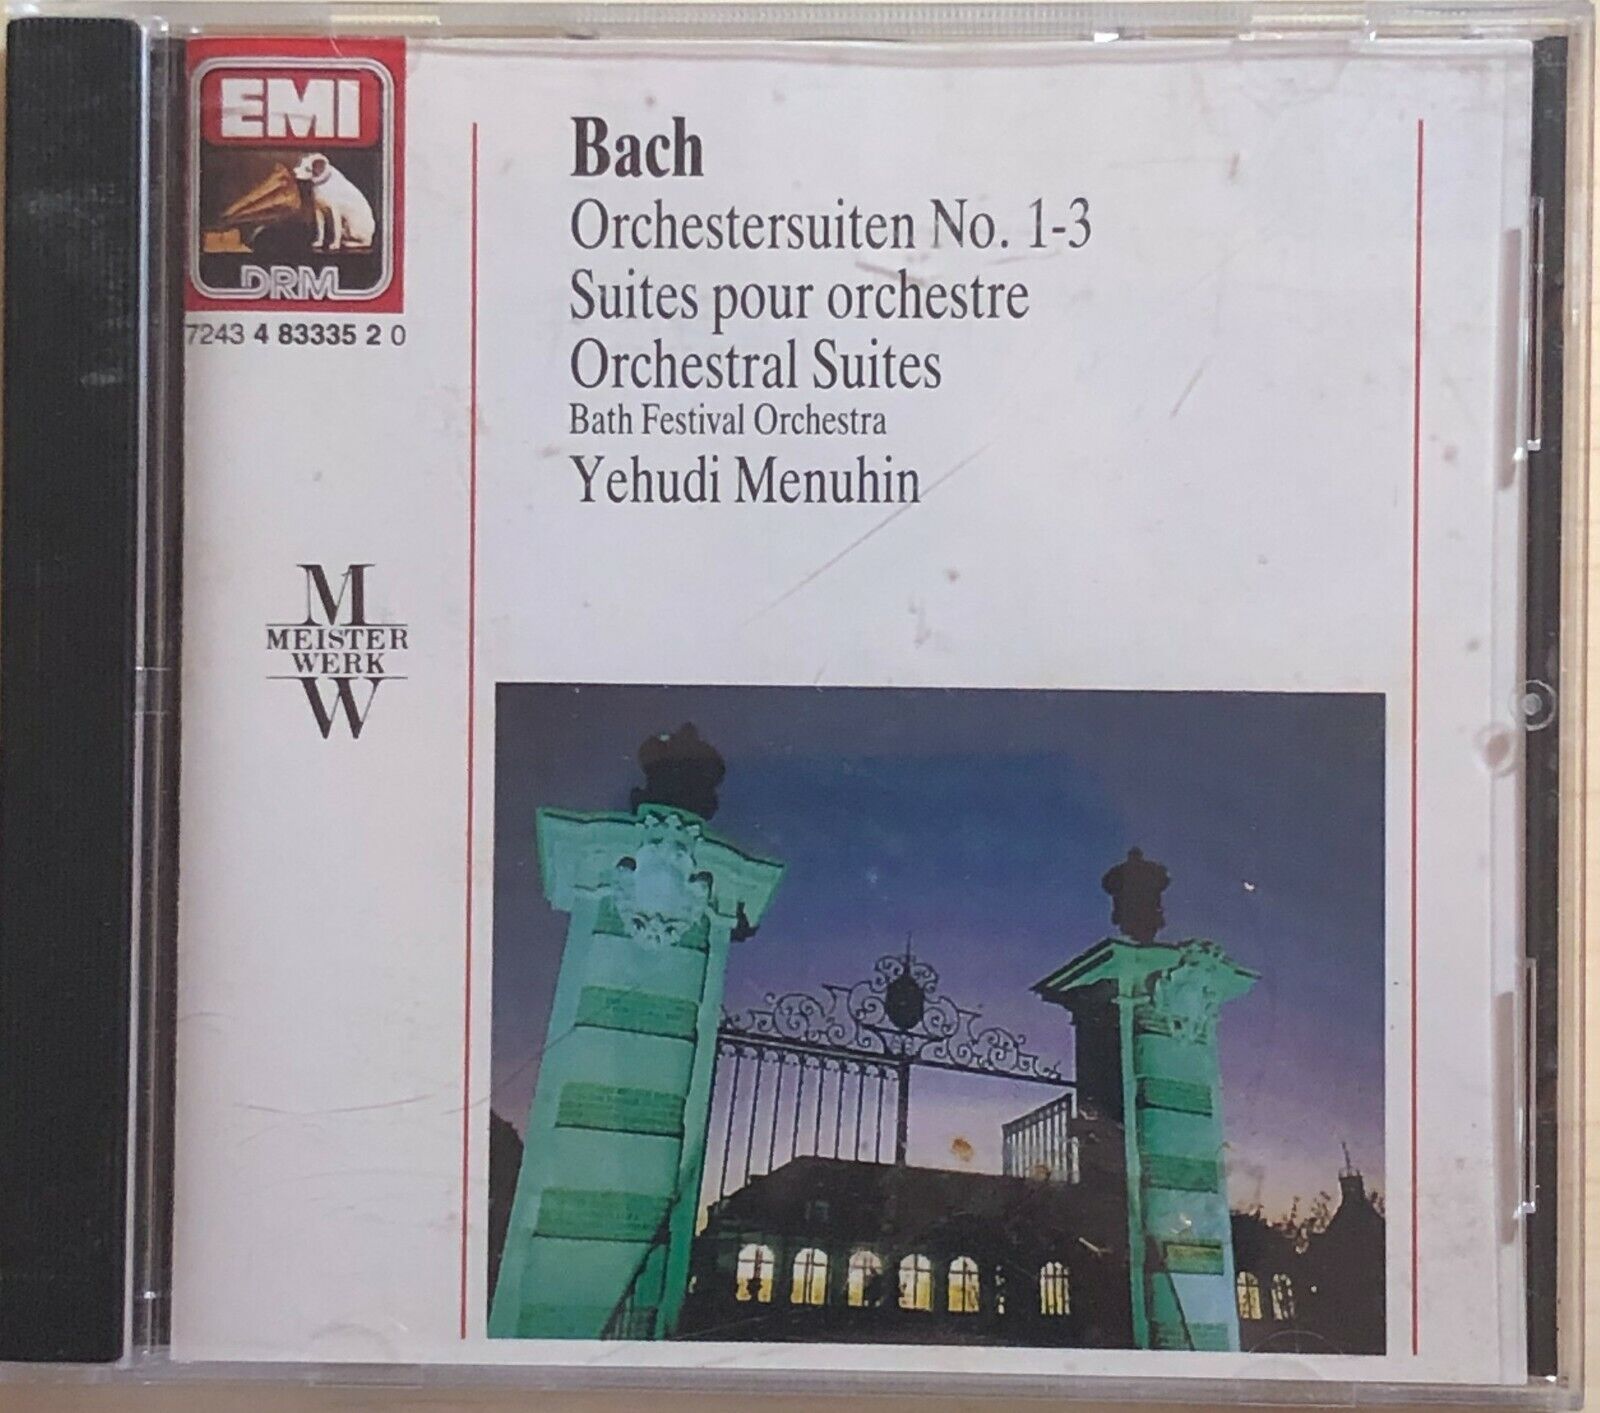 Bach, Orchestersuiten no.1-3 di Johann Bach, 1990, Emi Drive